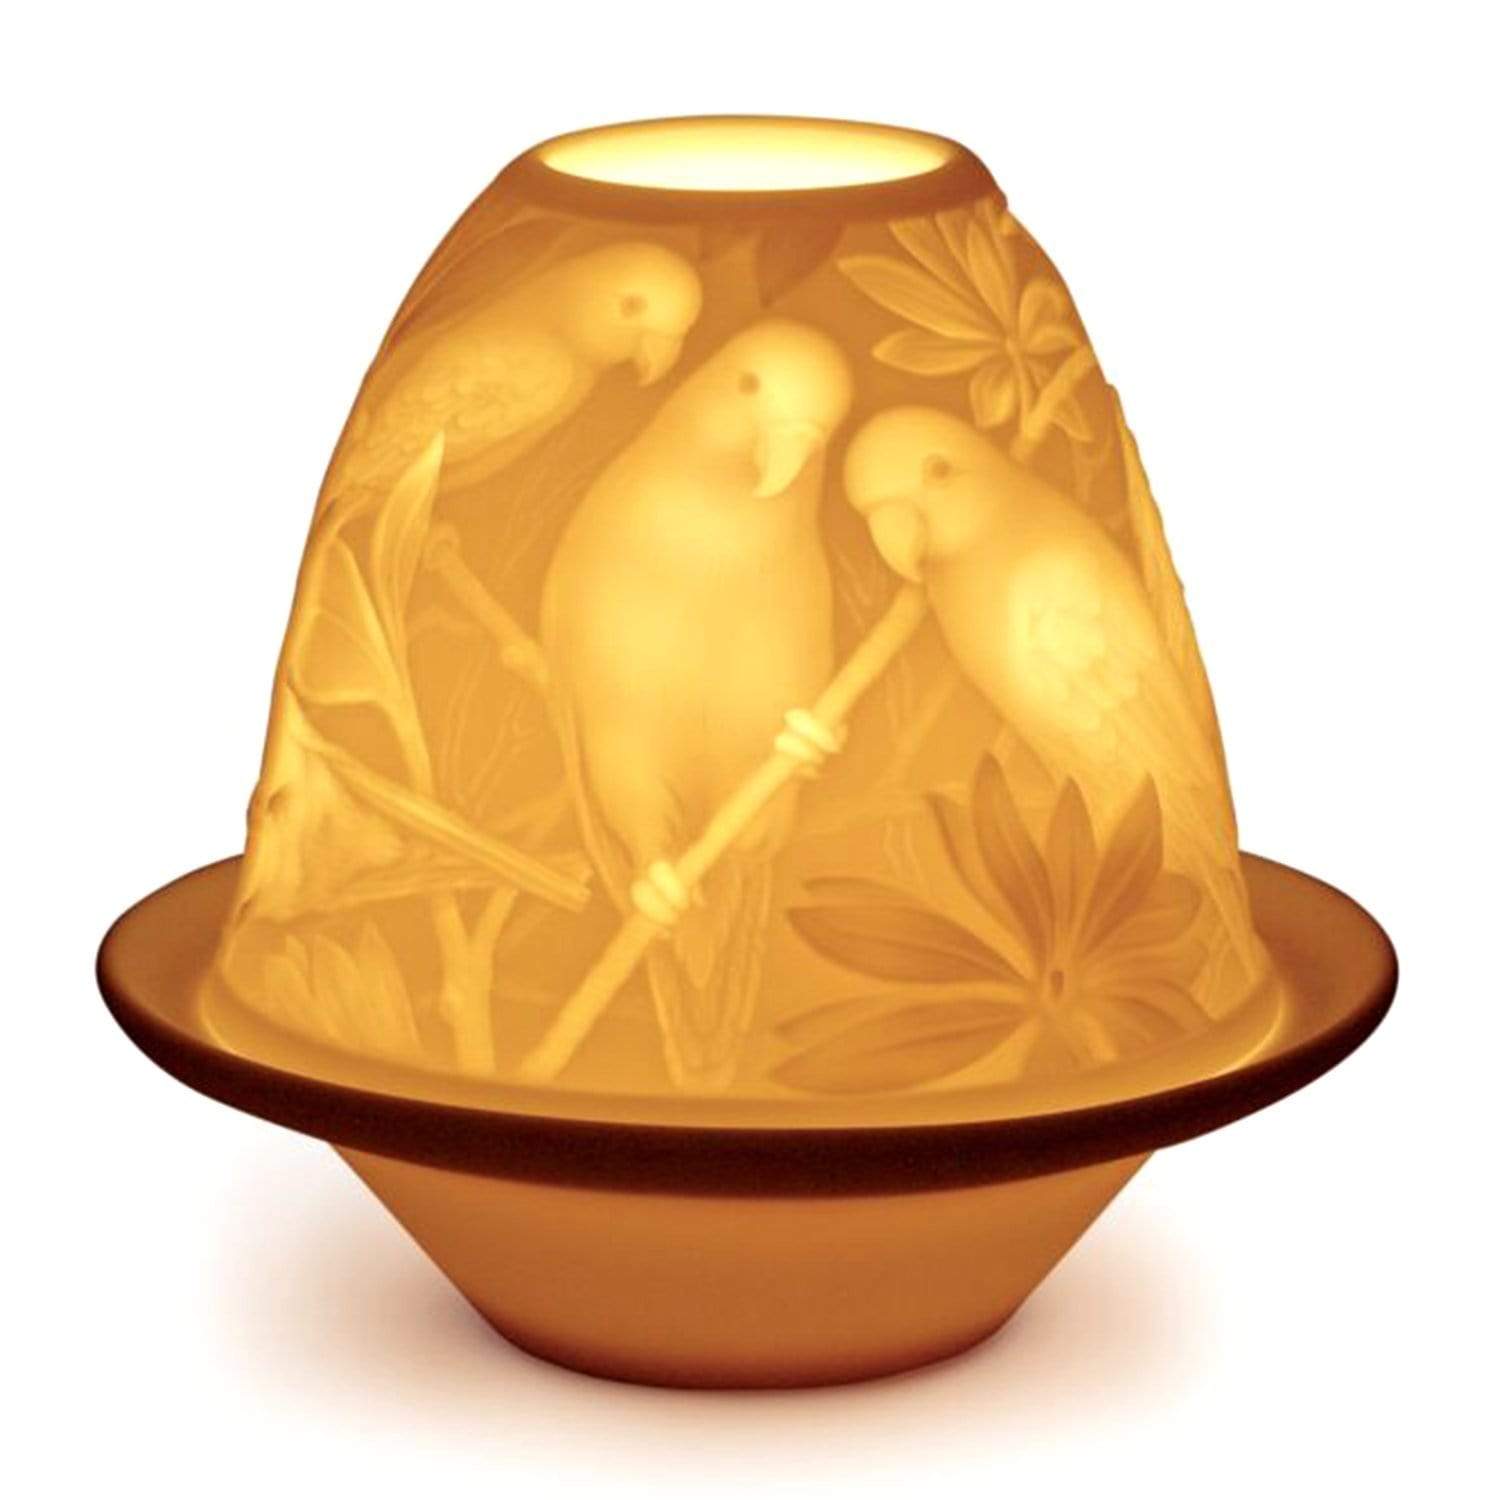 Lladro Parrots Lithophane Votive Light with Plate - 1017305 - Jashanmal Home